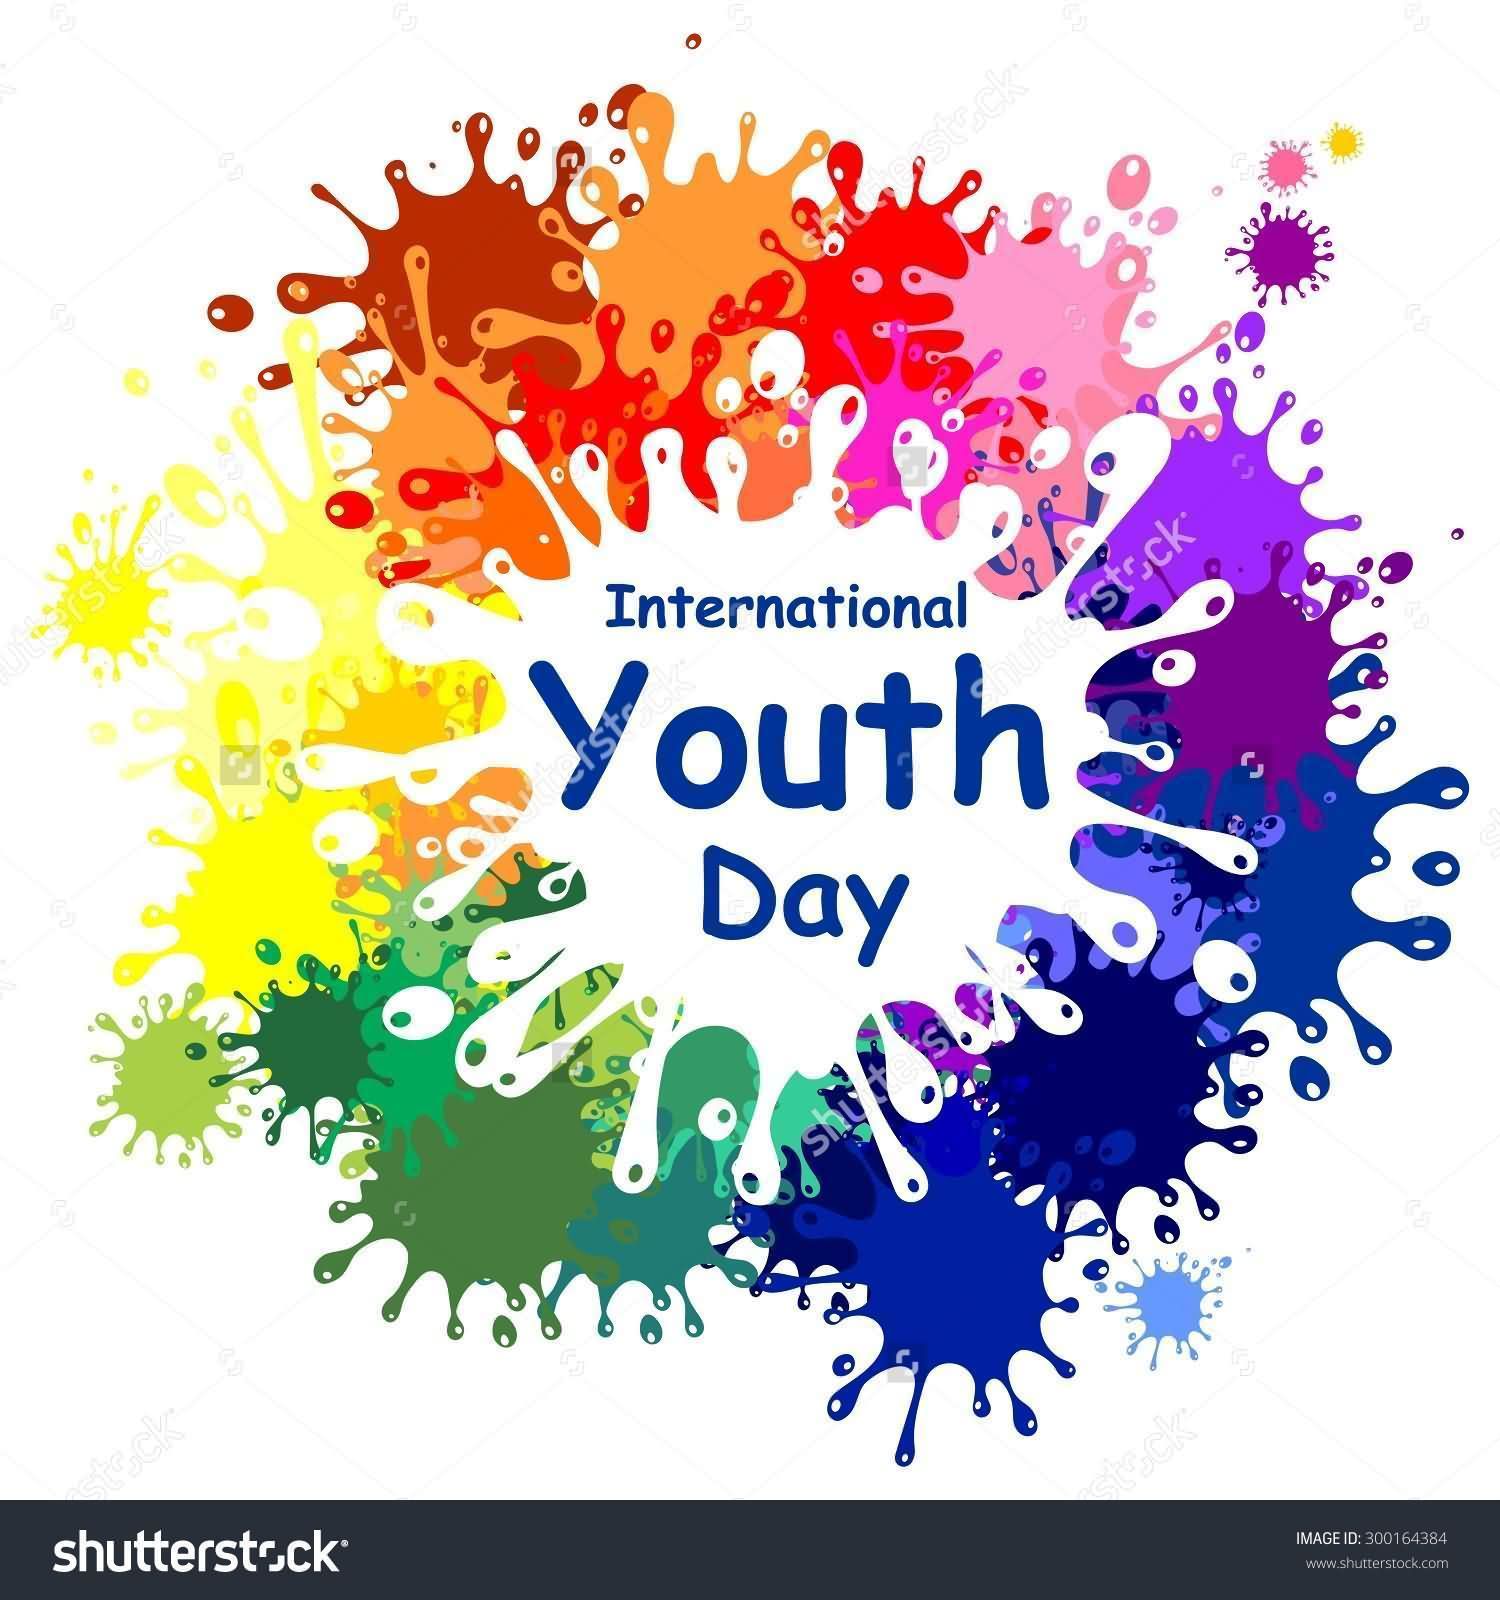 International Youth Day Color Splash Illustration